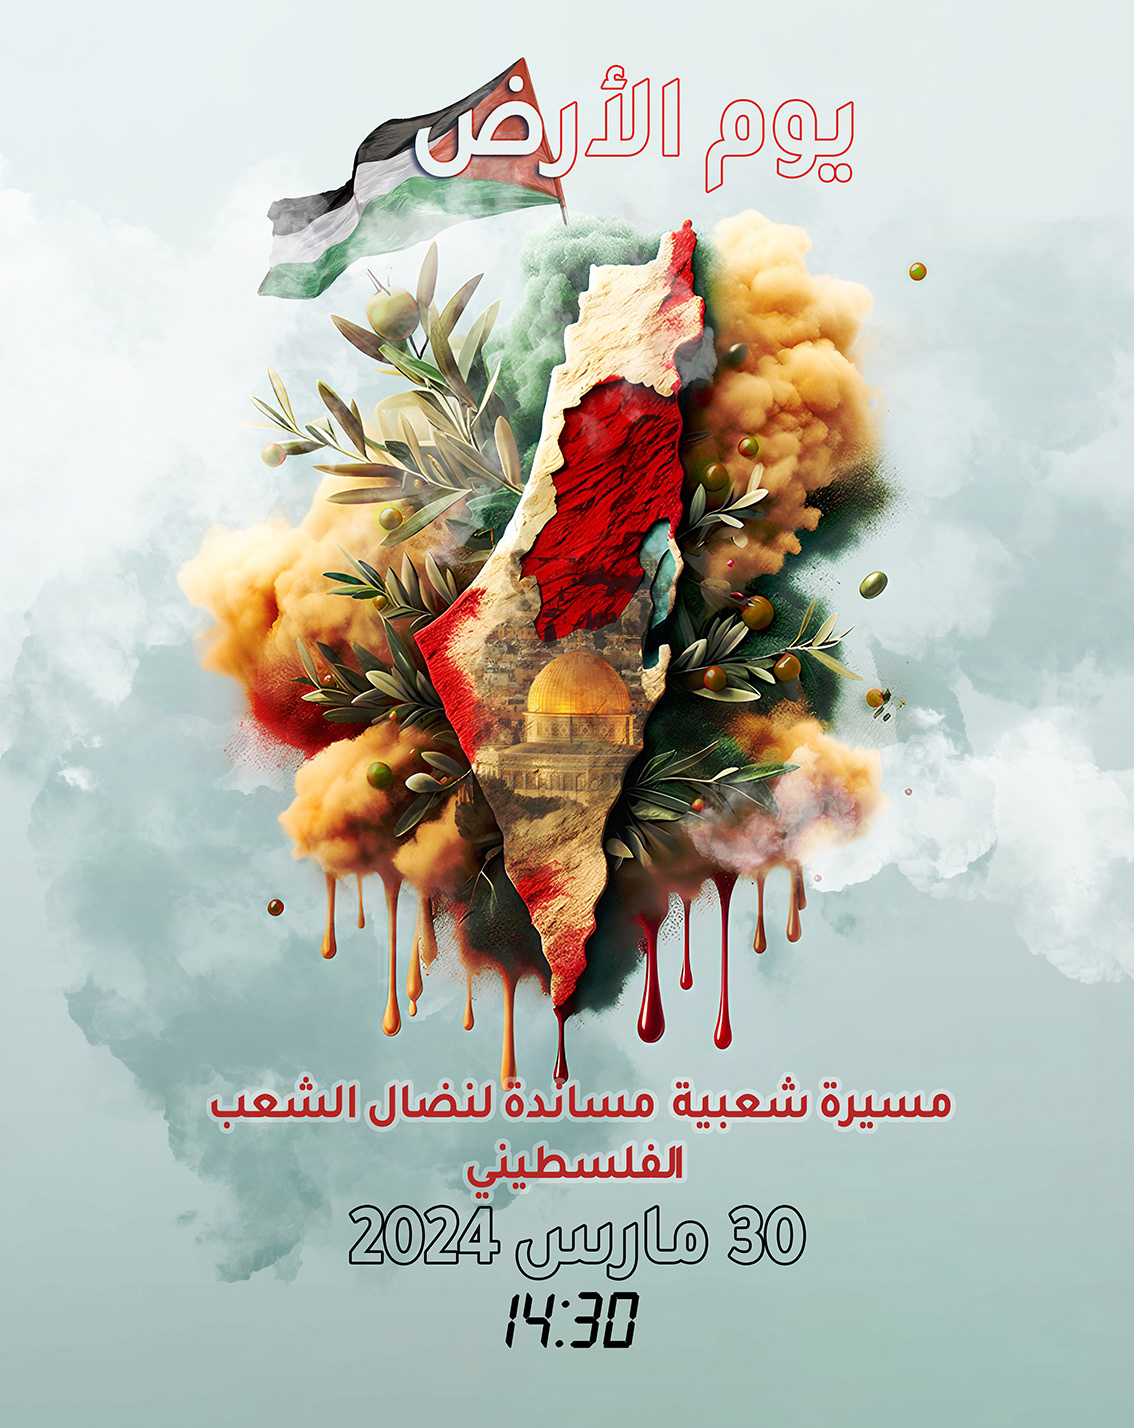 earth day environment palestine gaza freedom poster kakemono banderole